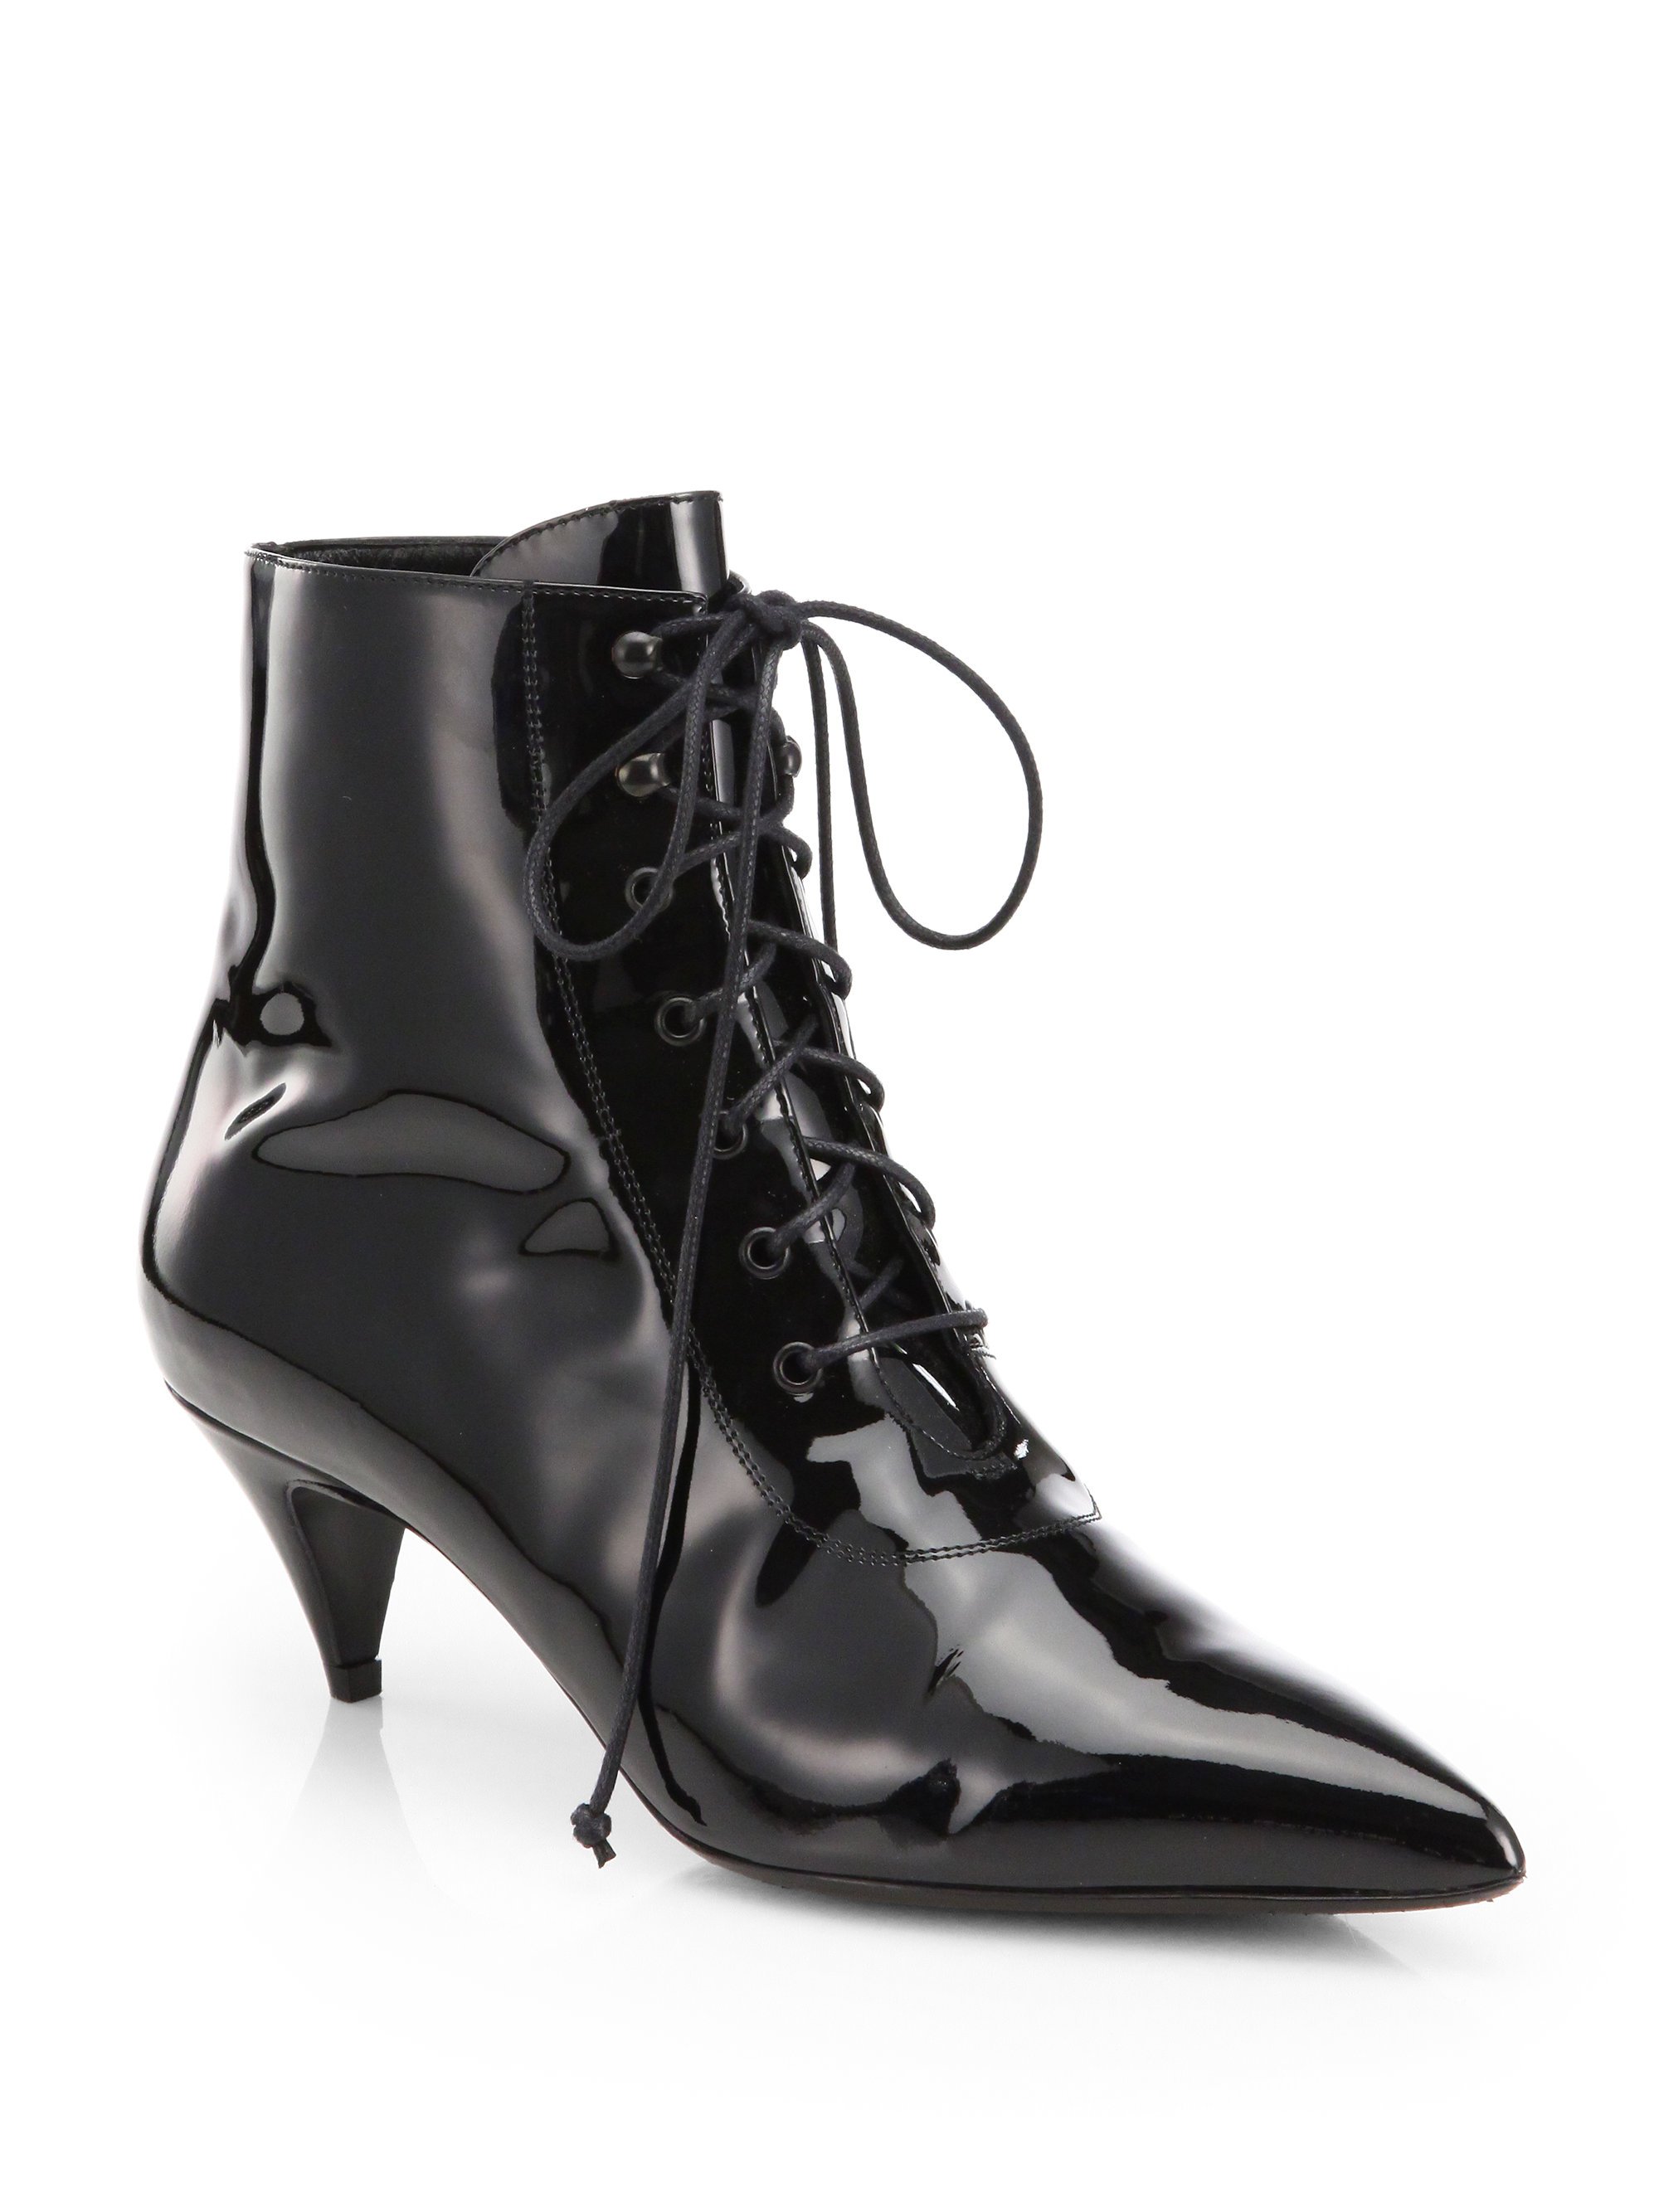 Lyst - Saint Laurent Cat Patent Leather Laceup Ankle Boots in Black